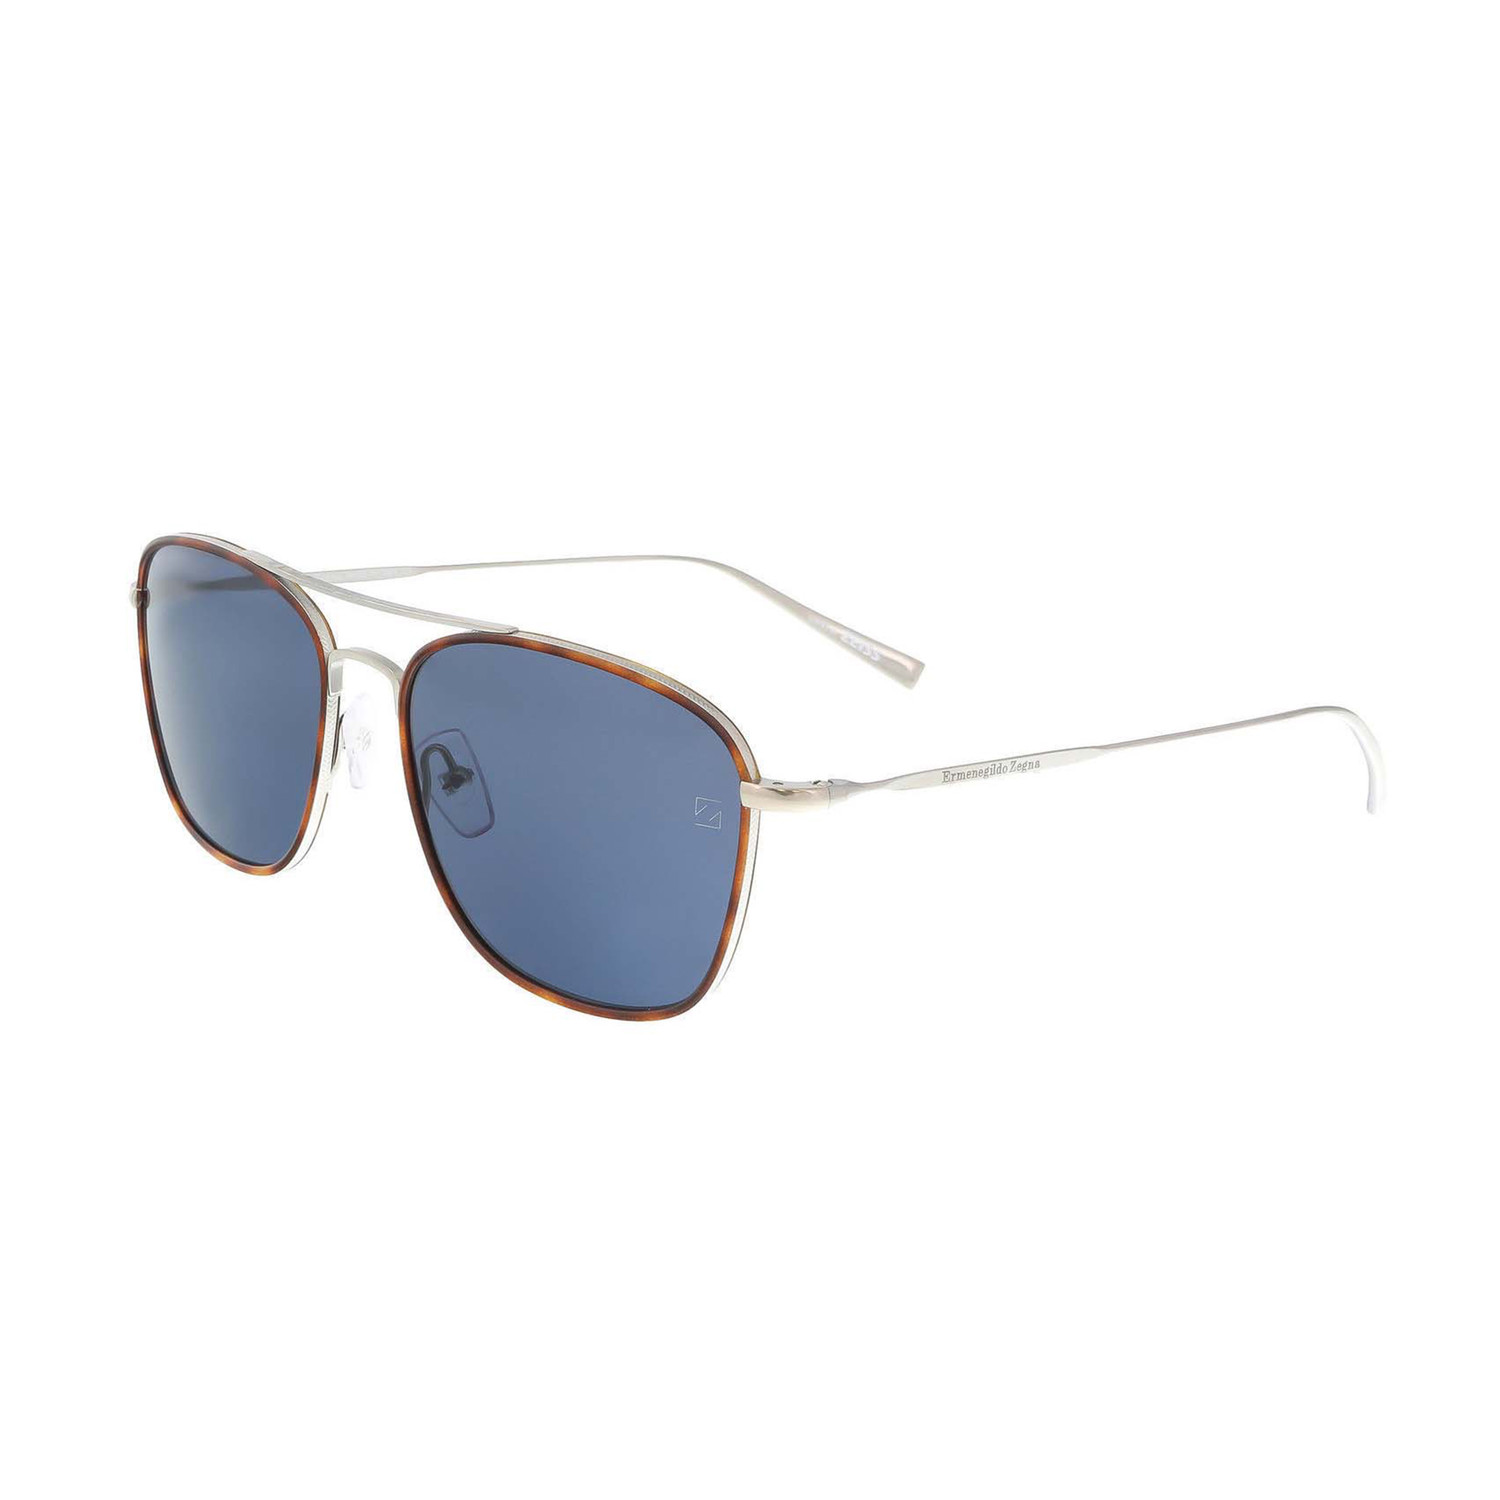 Zegna // Men's Classic Navigator Sunglasses // Havana + Silver Gray ...